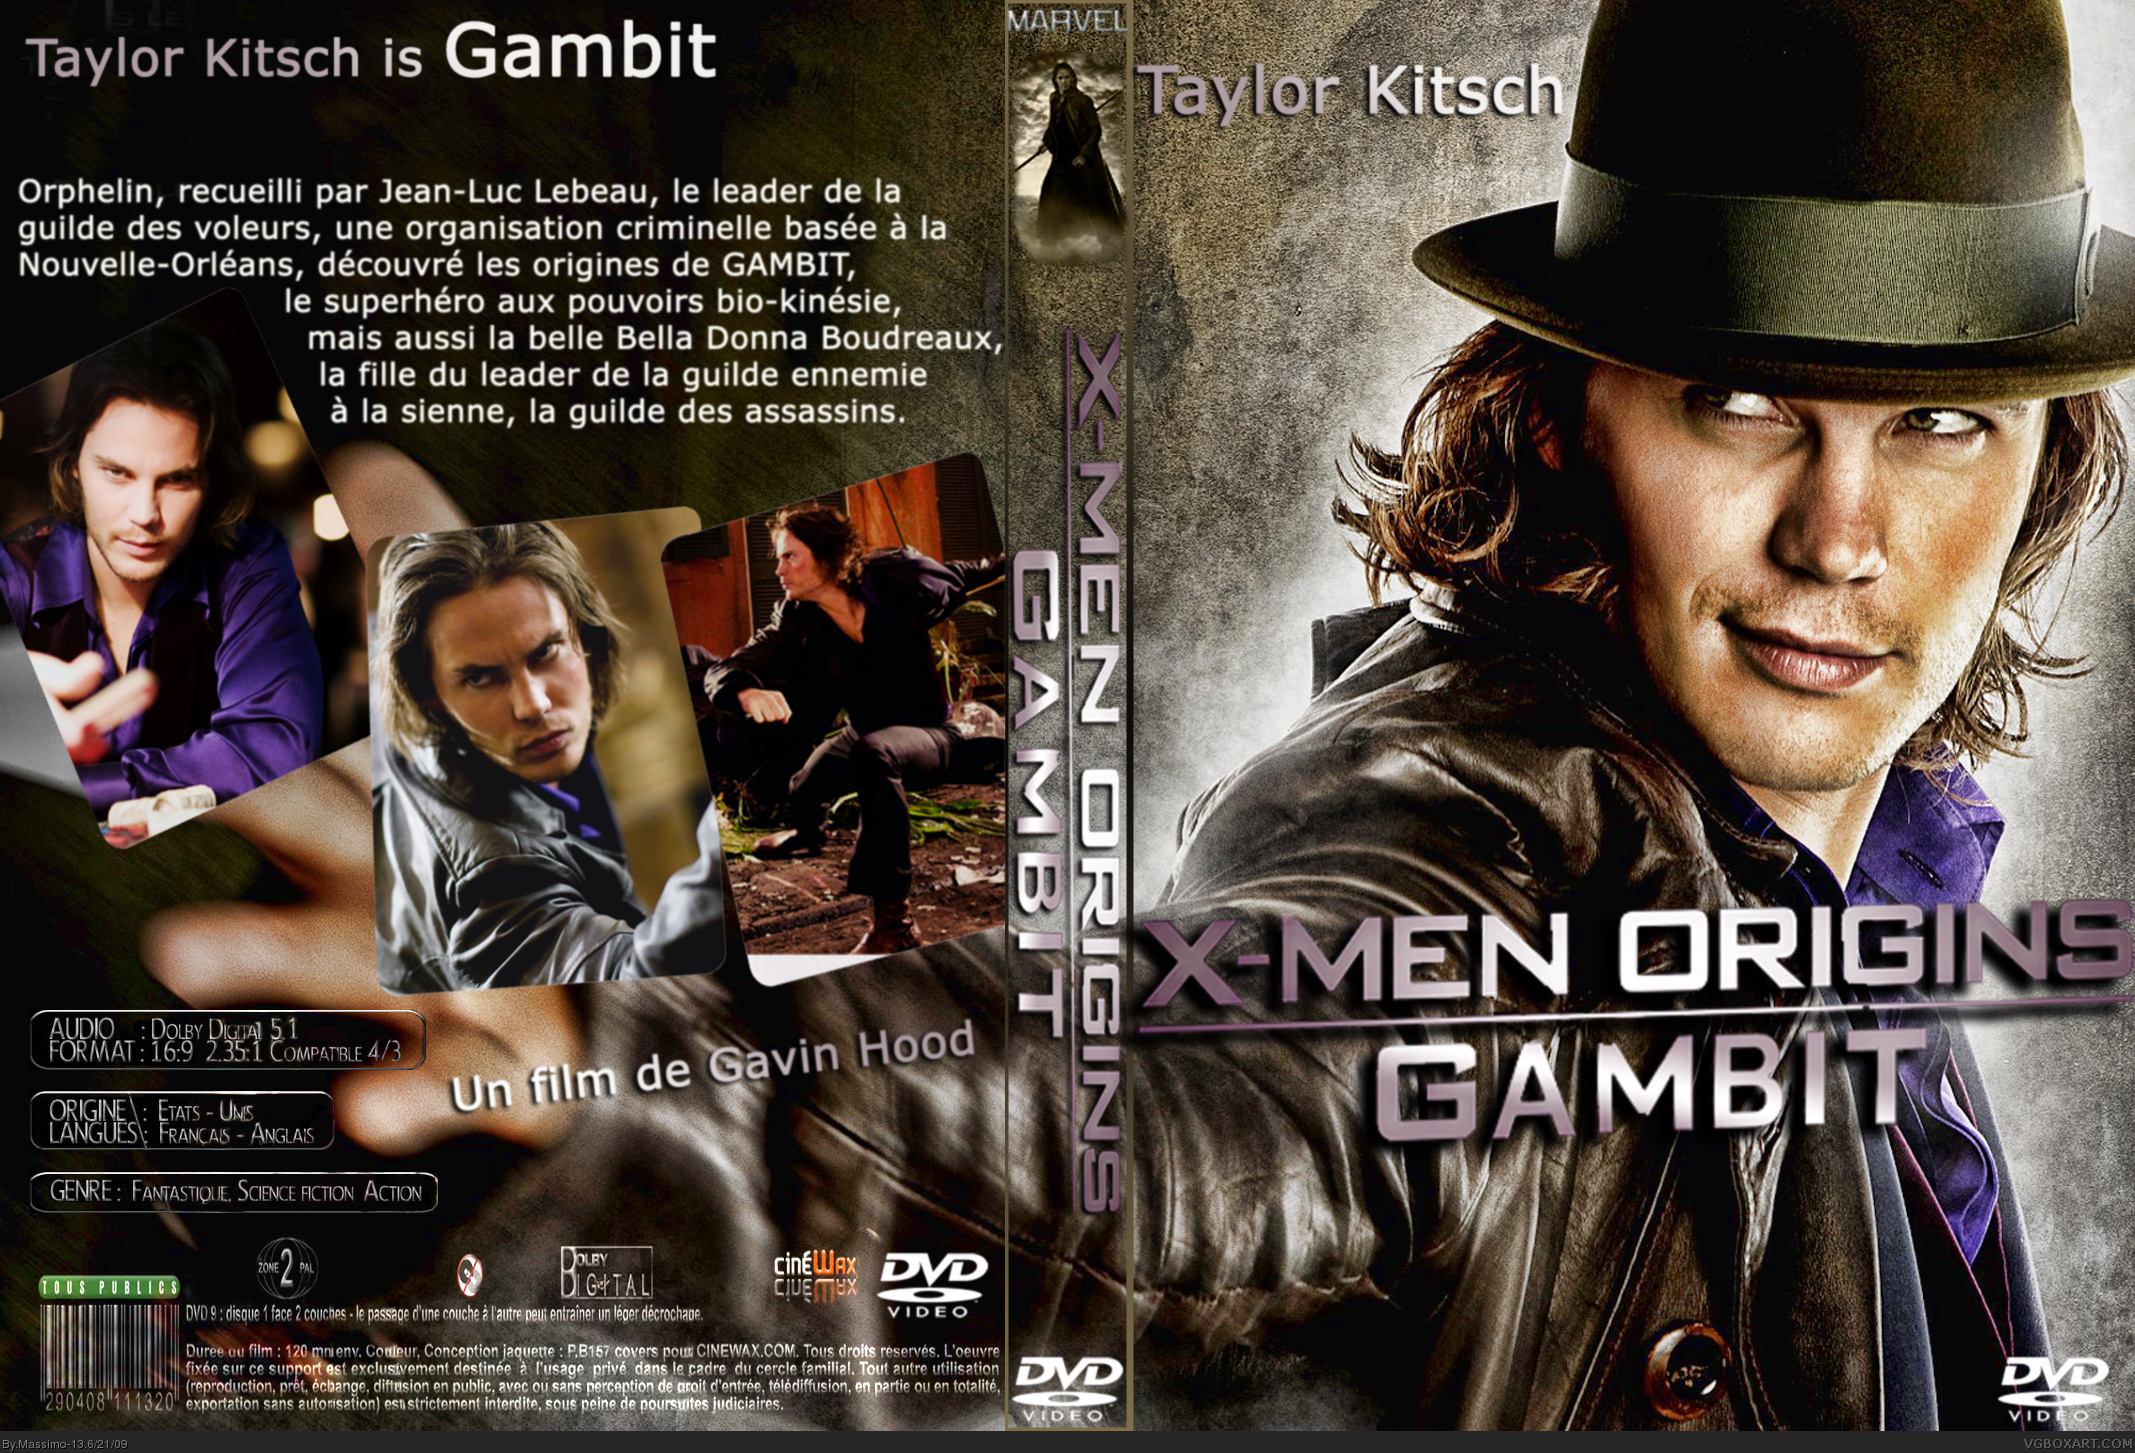 X-Men Origins: Gambit box cover